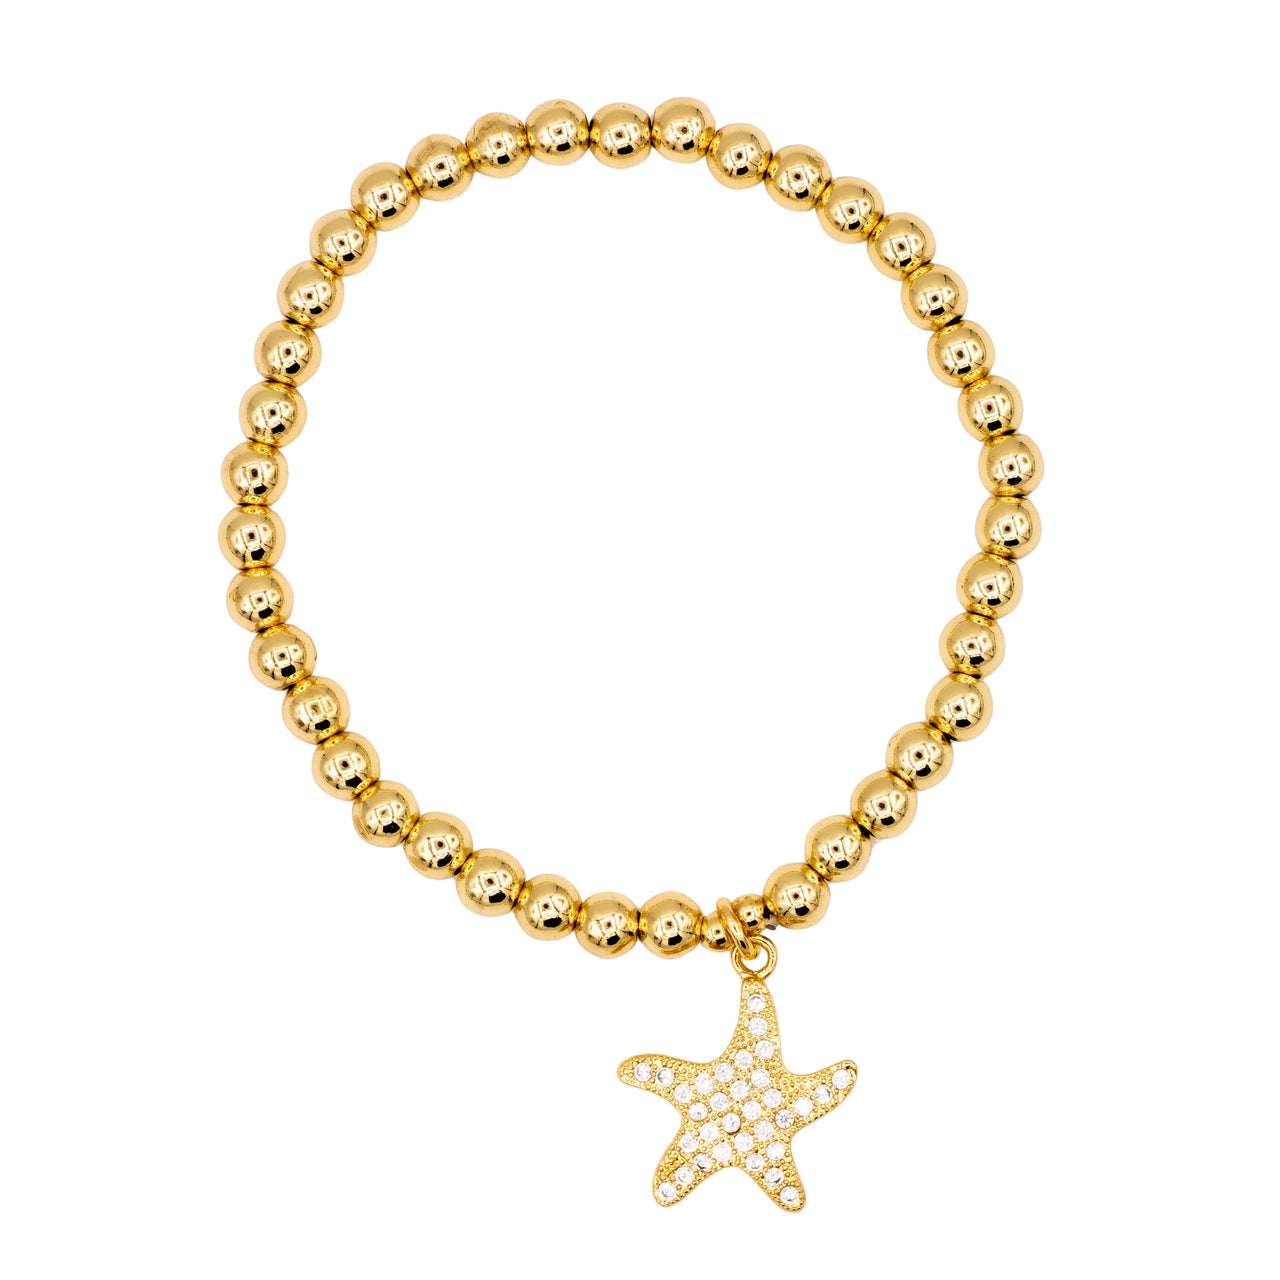 The 5mm Starfish Beaded Bracelet